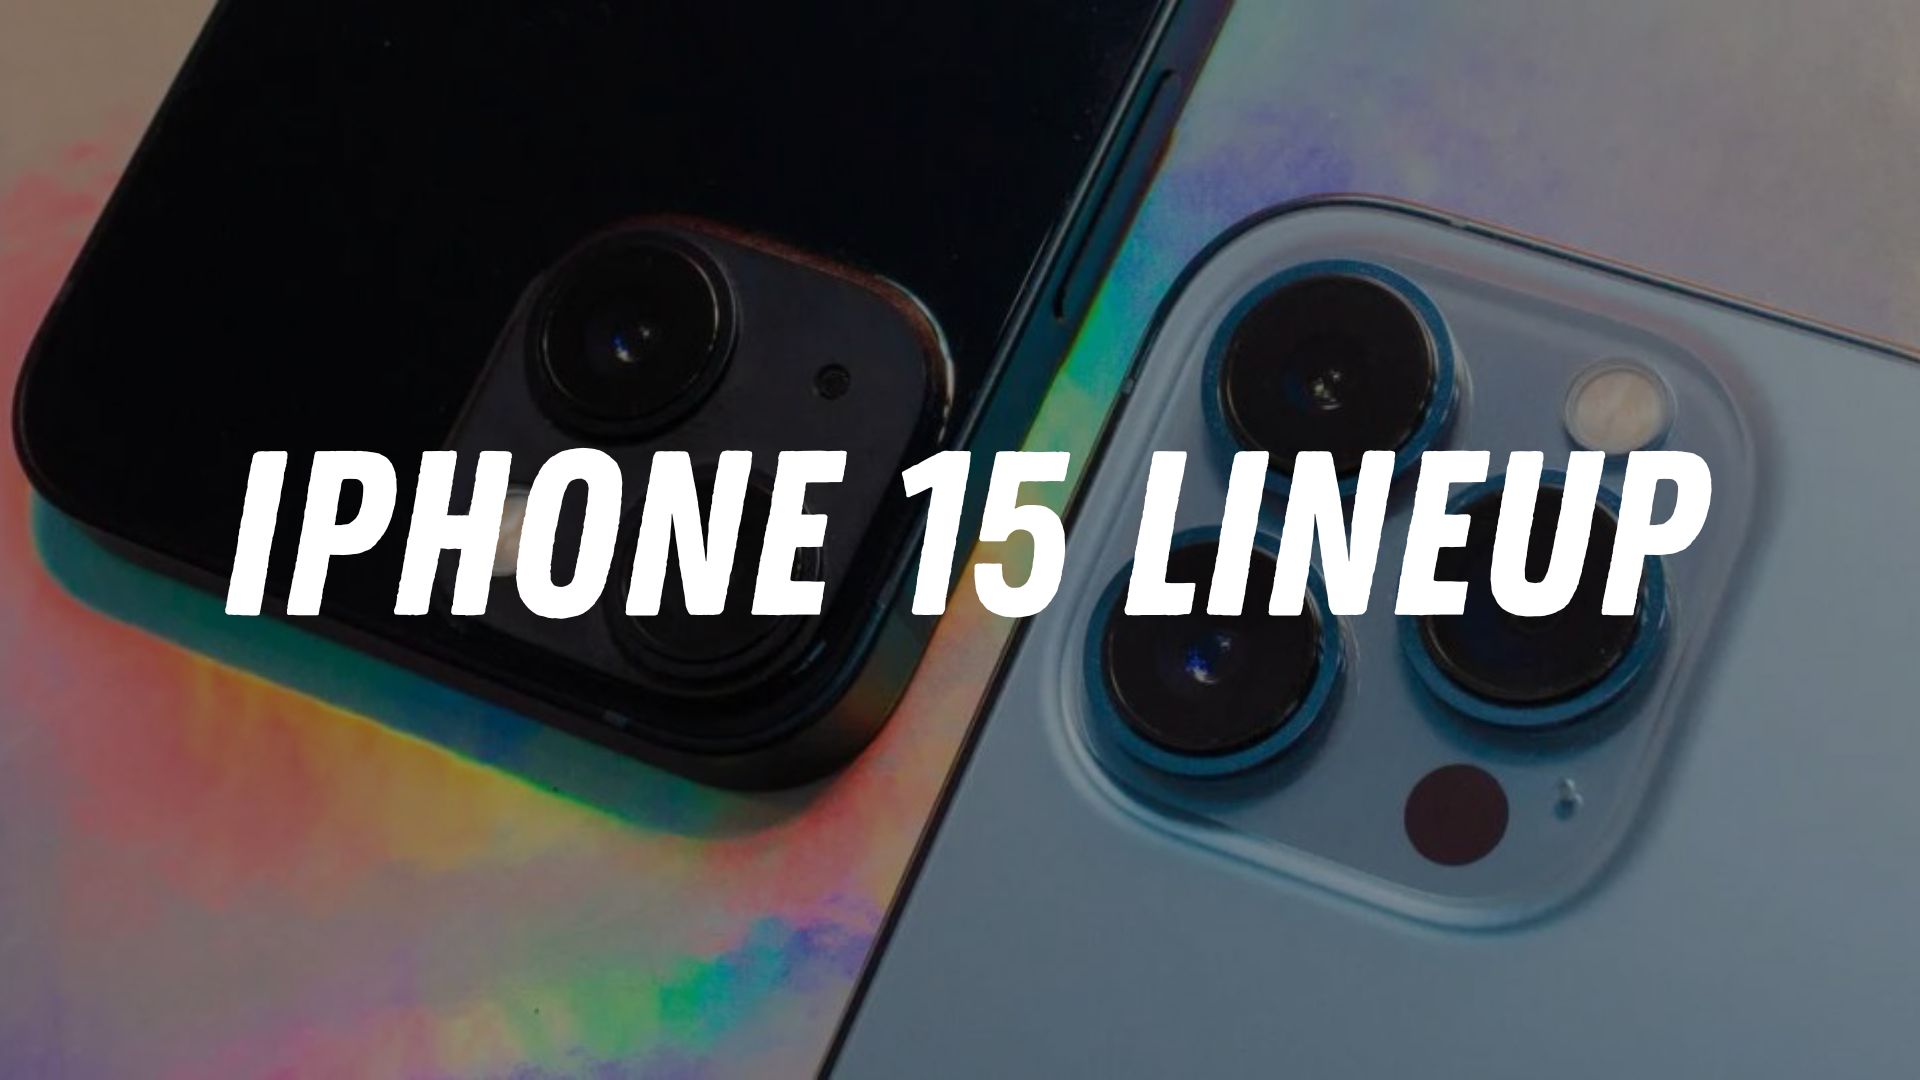 iPhone 15 Lineup